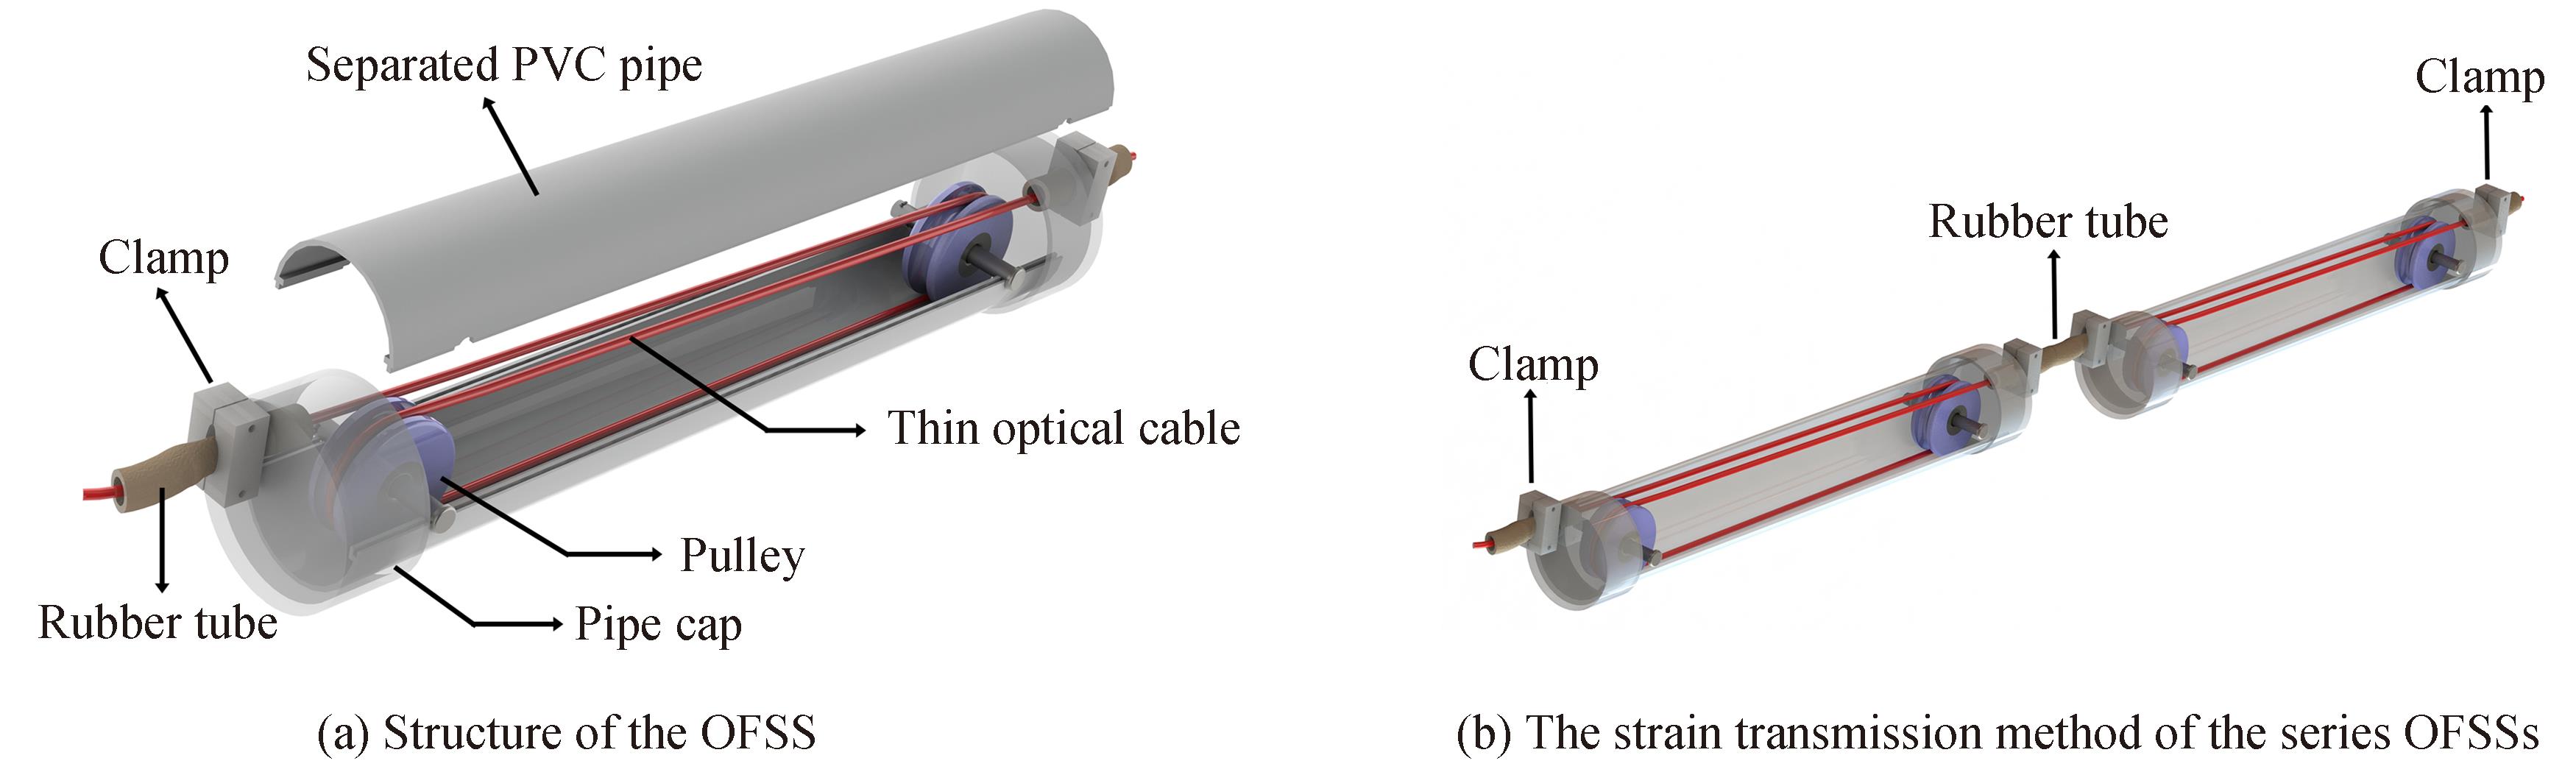 Optical fiber sensing structure based on BOTDR